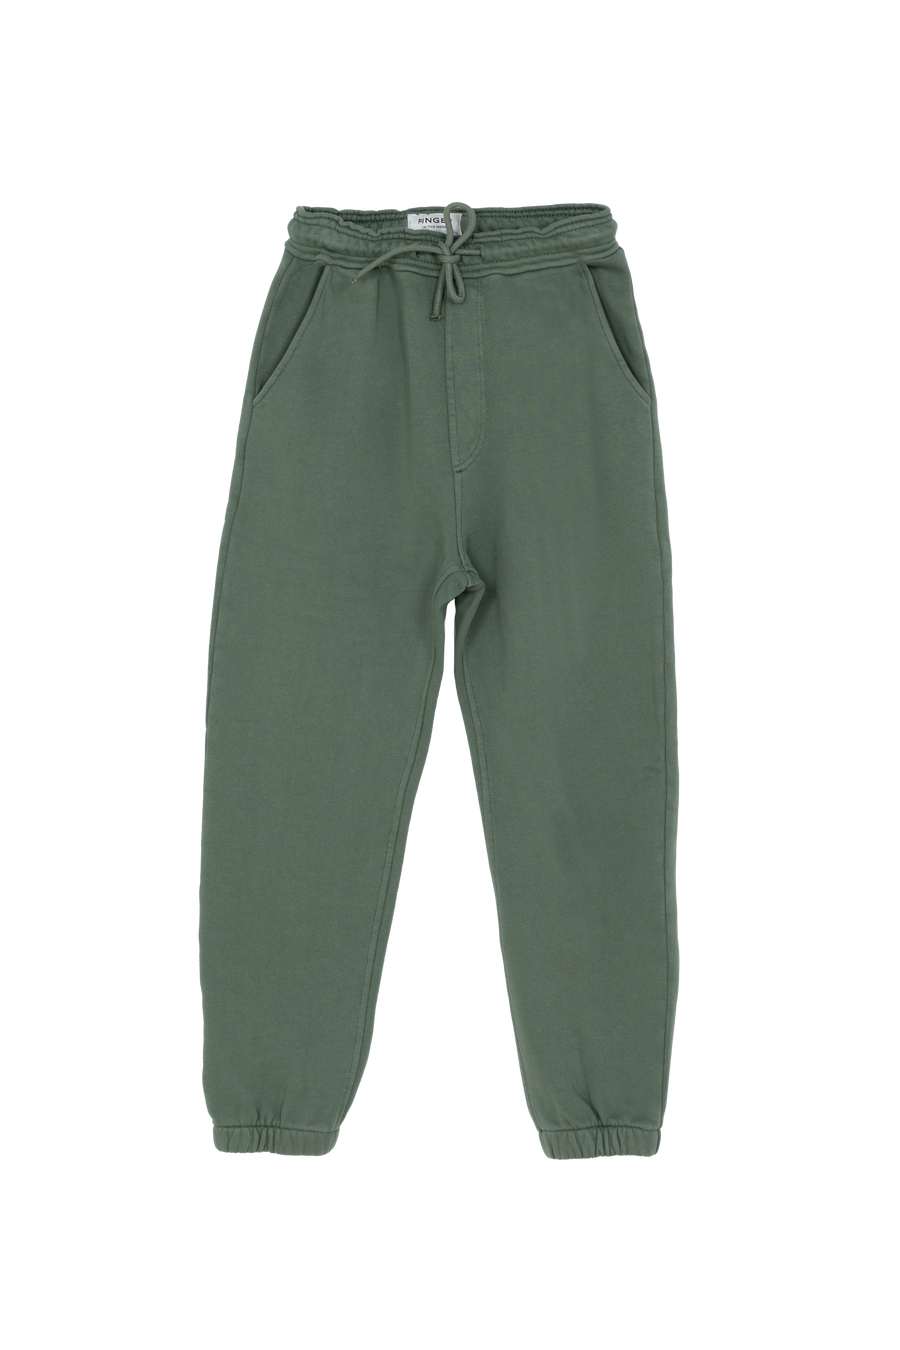 HURRY Cedar Green - Sweatpants